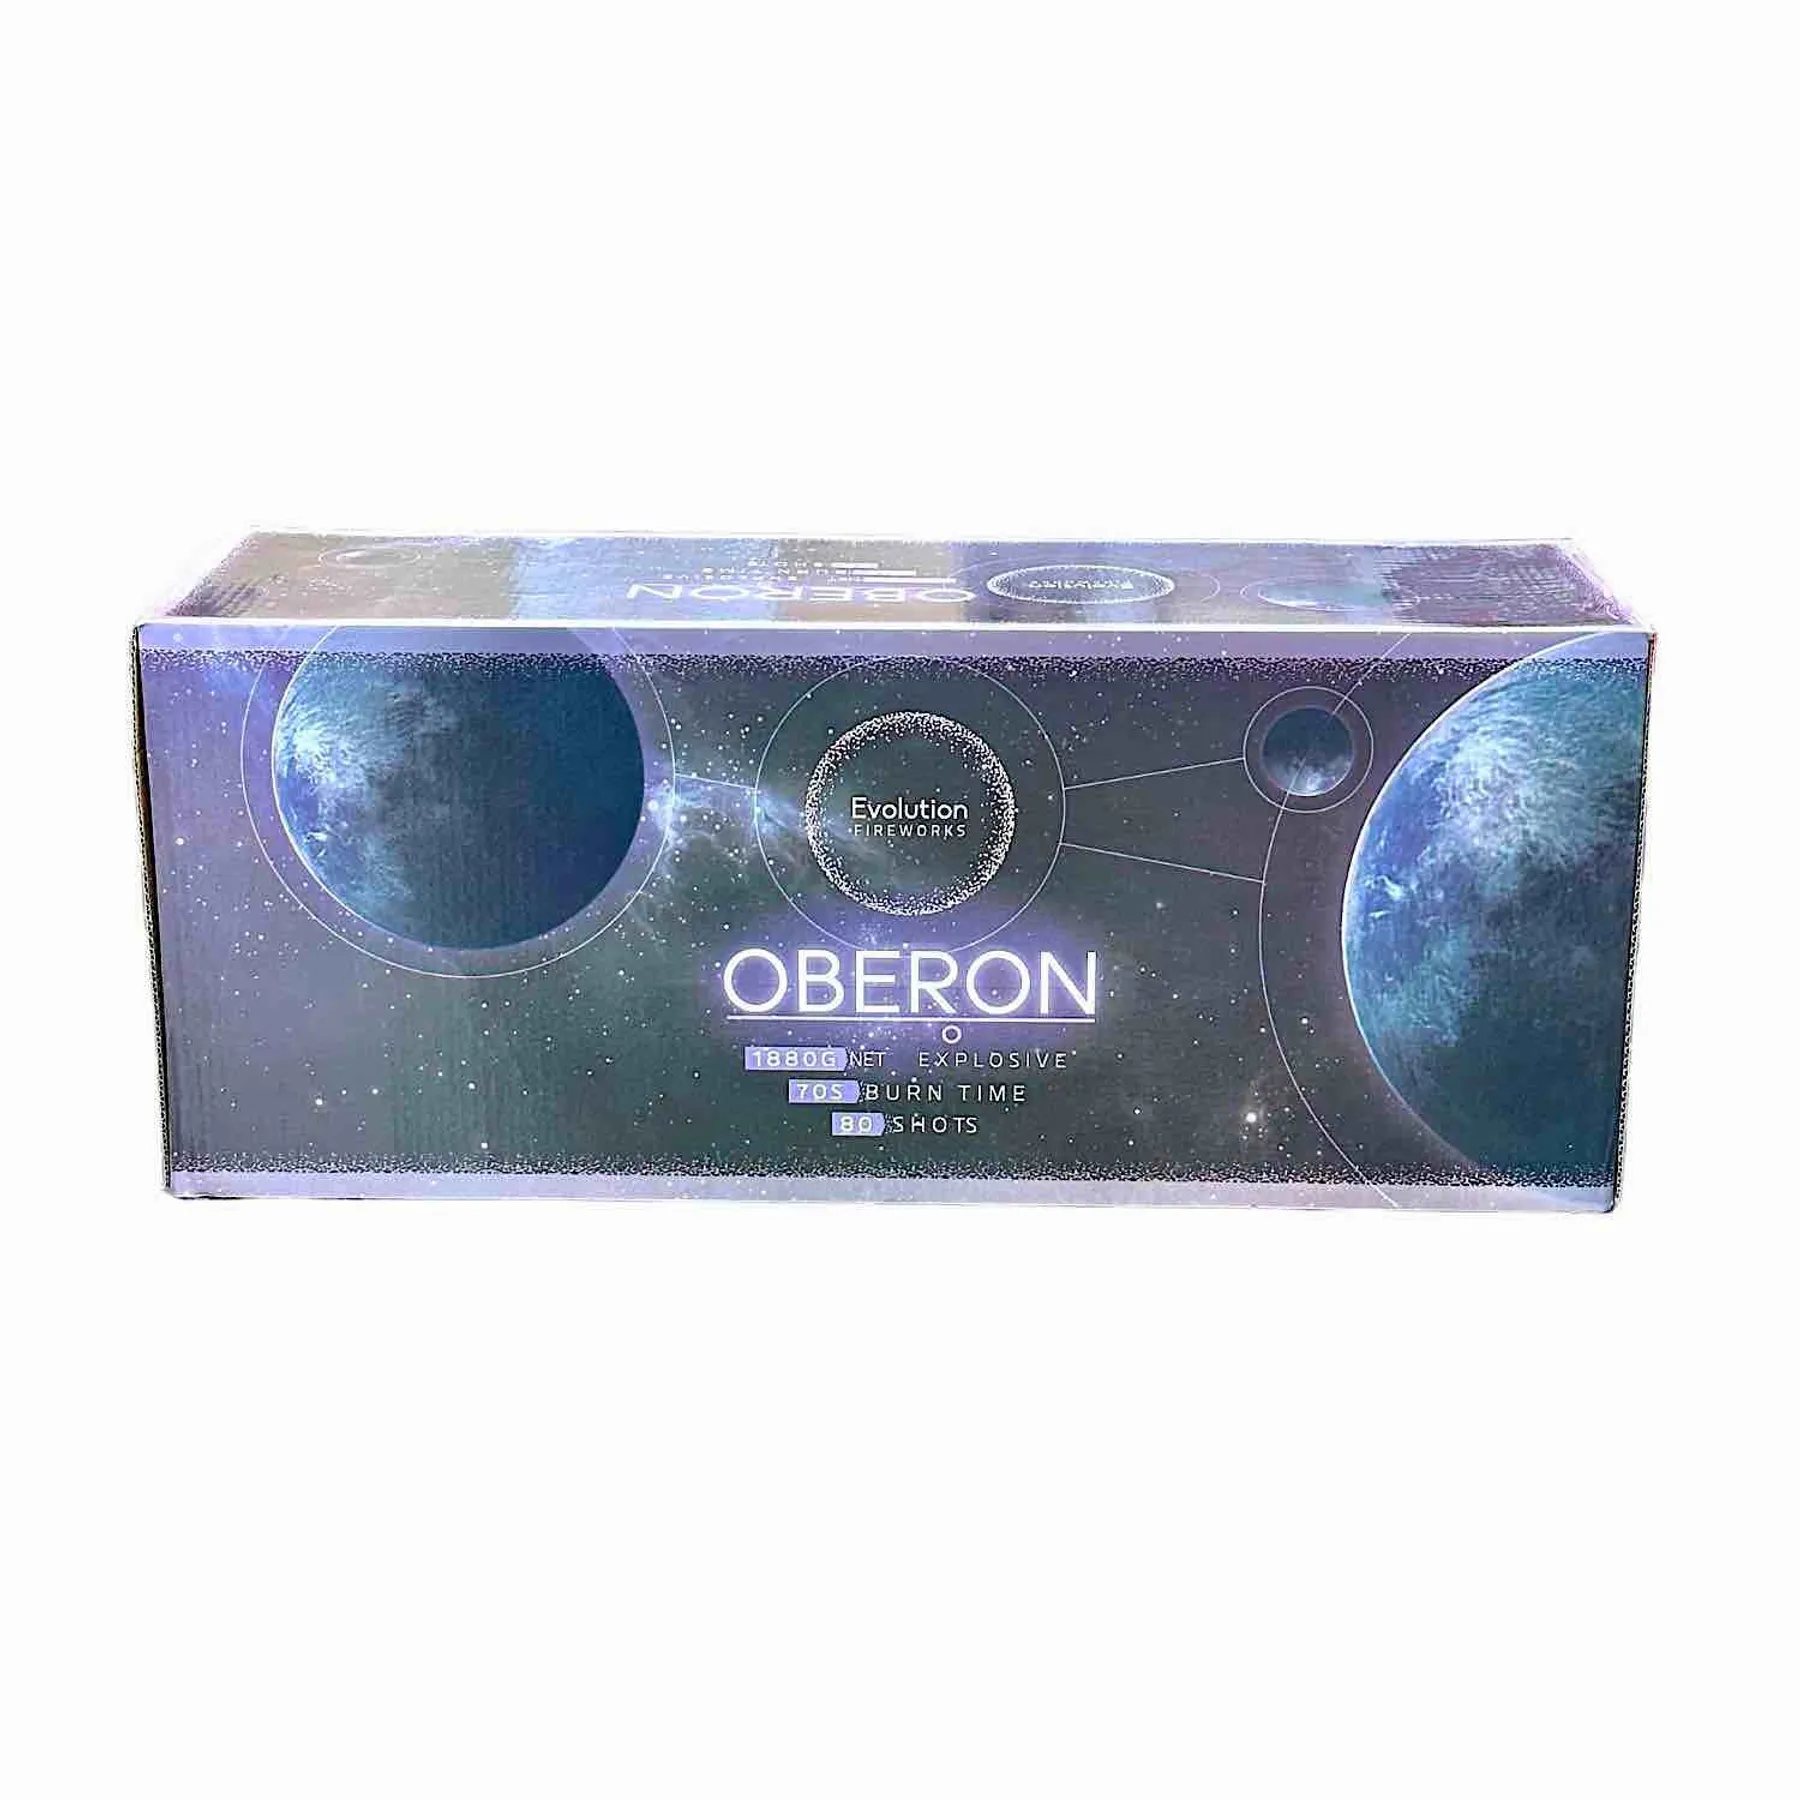 Oberon Evolution Manchester Fireworks